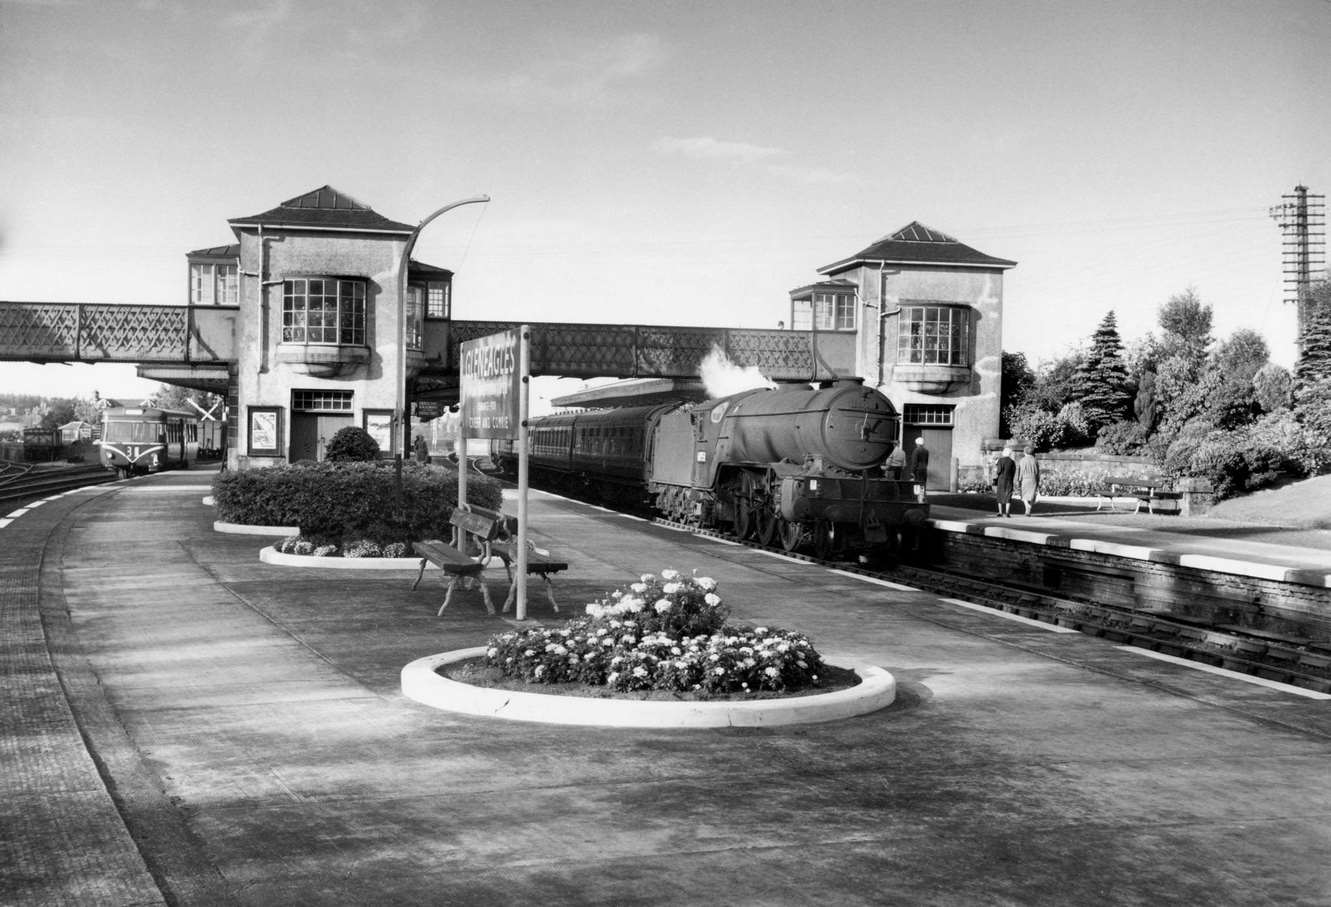 The Caledonian Railway's Gleneagles station, 1961